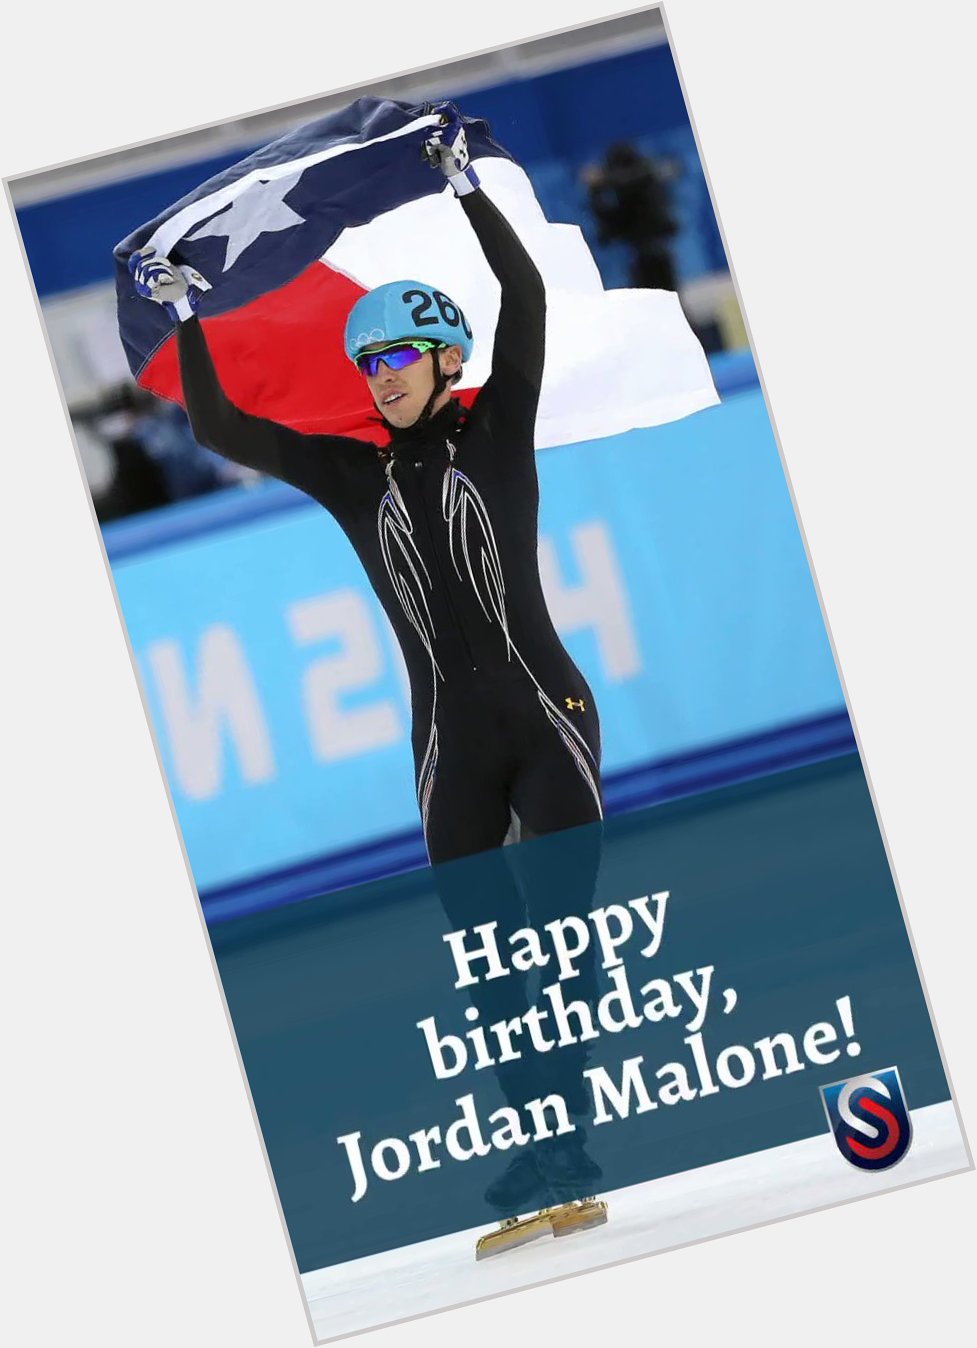 Happy birthday to Olympic medalist, Jordan Malone!  